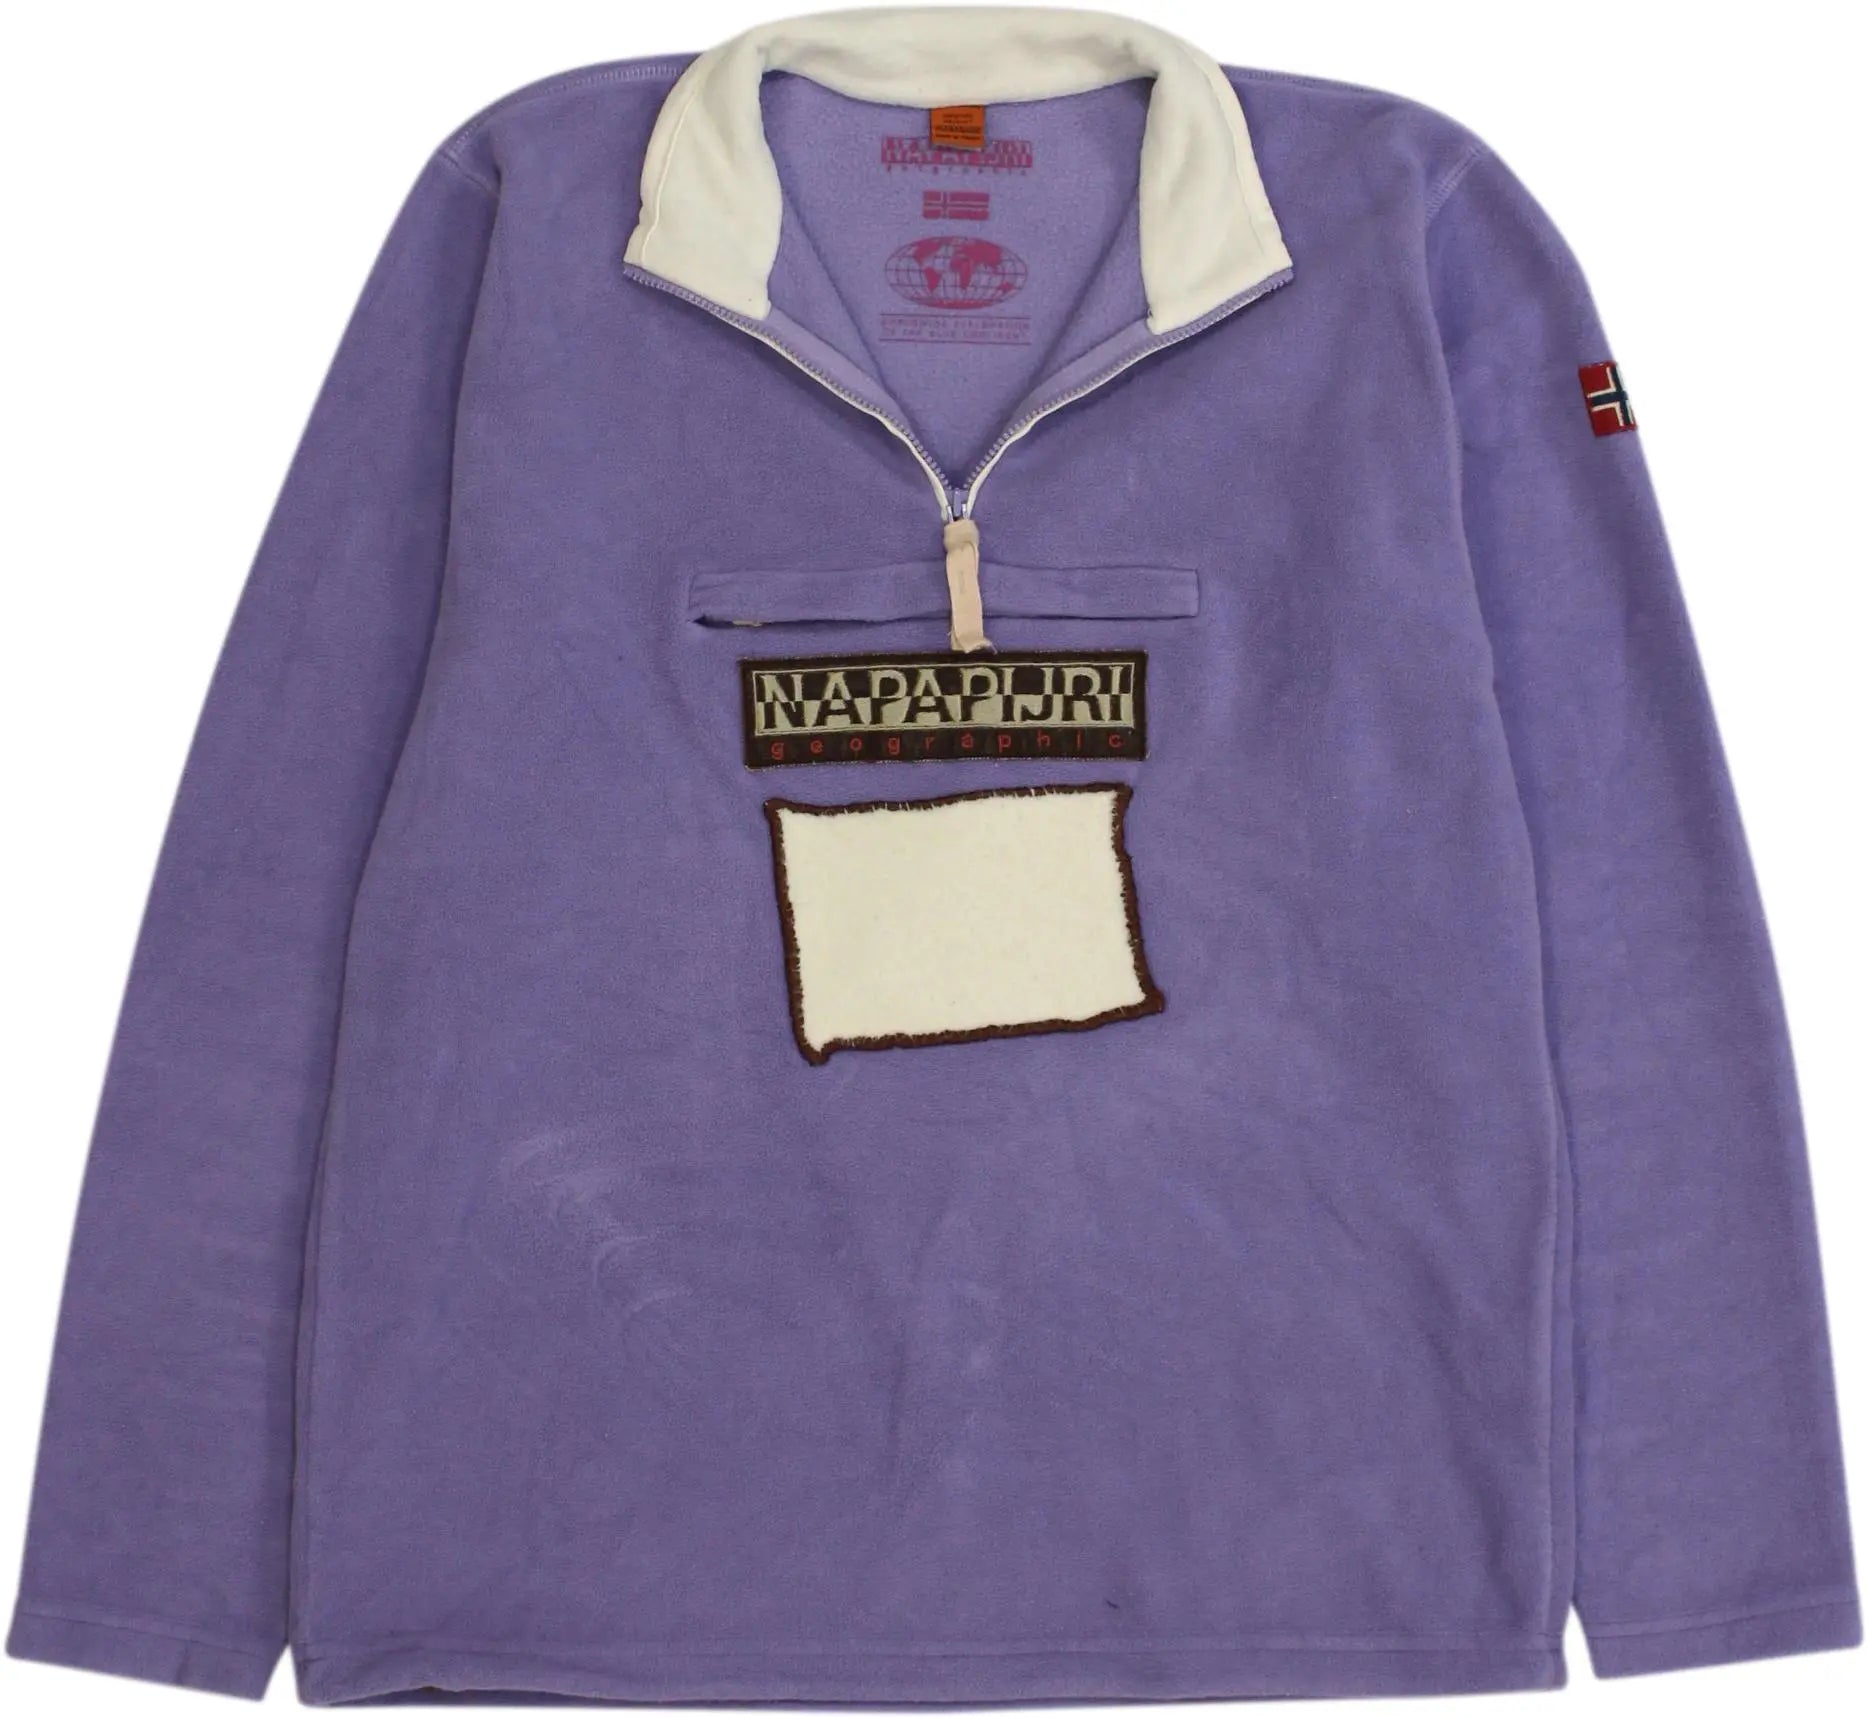 Napapijri - Purple Sweater by Napapijri- ThriftTale.com - Vintage and second handclothing